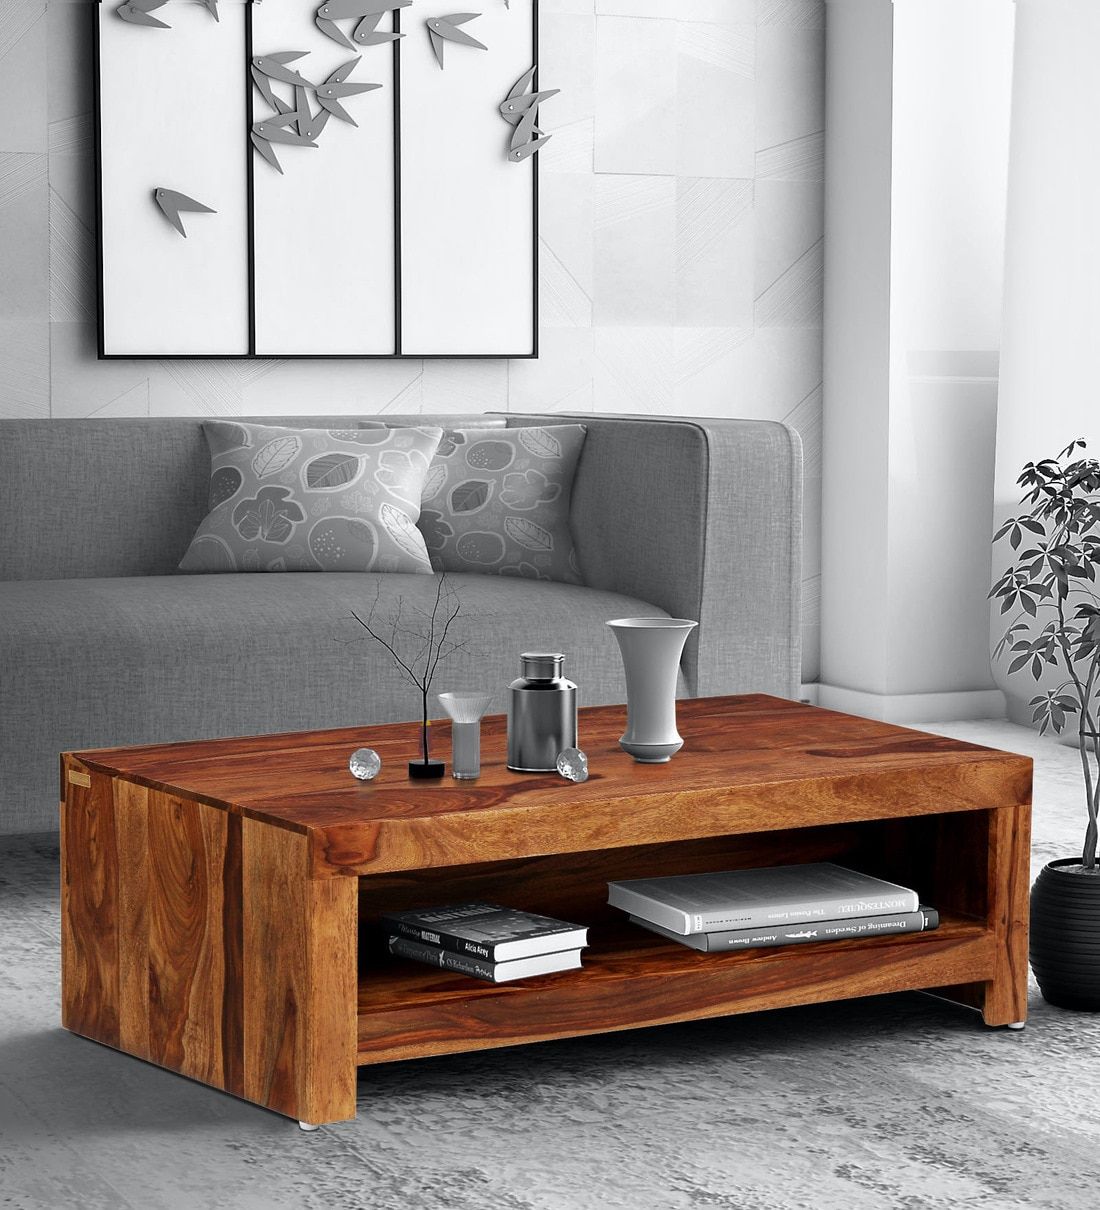 Buy Acropolis Solid Wood Coffee Table In Rustic Teak Finish With Rustic Wood Coffee Tables (View 6 of 21)